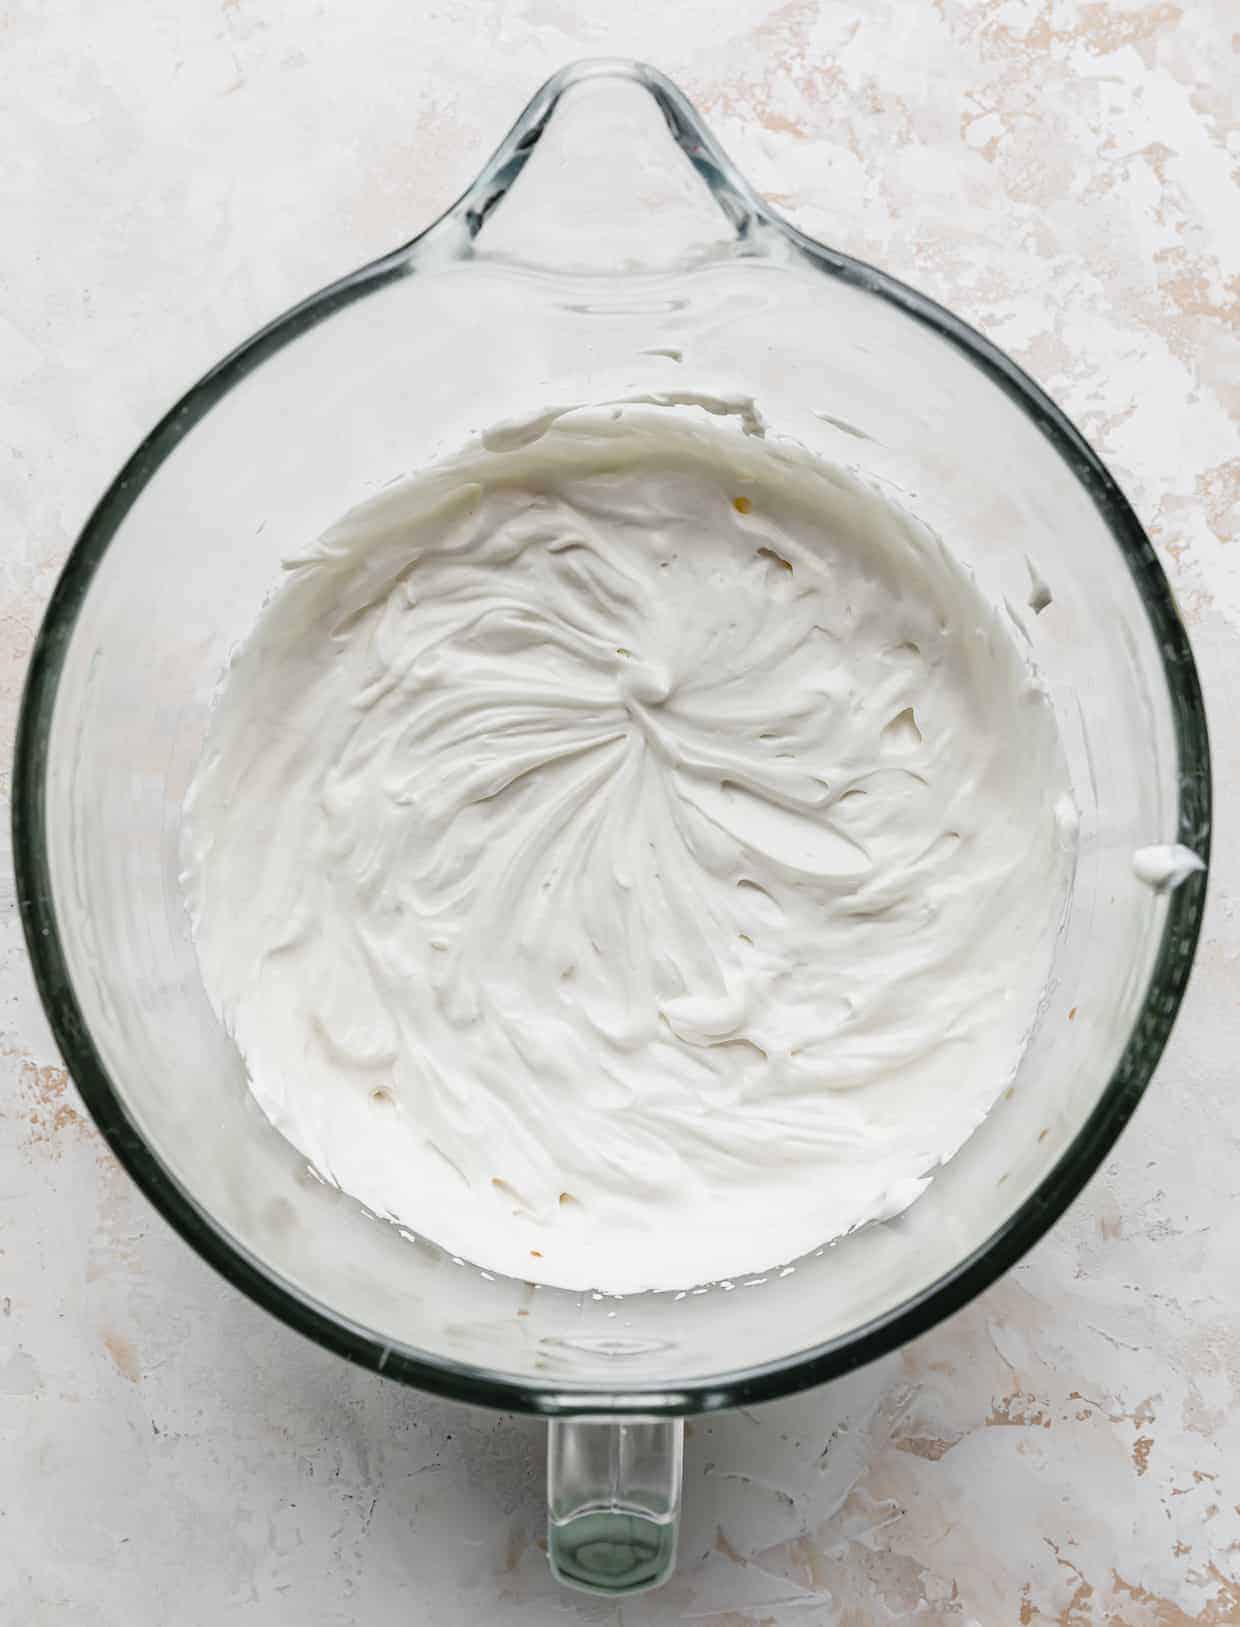 Whipped heavy cream with Greek yogurt in a glass bowl.